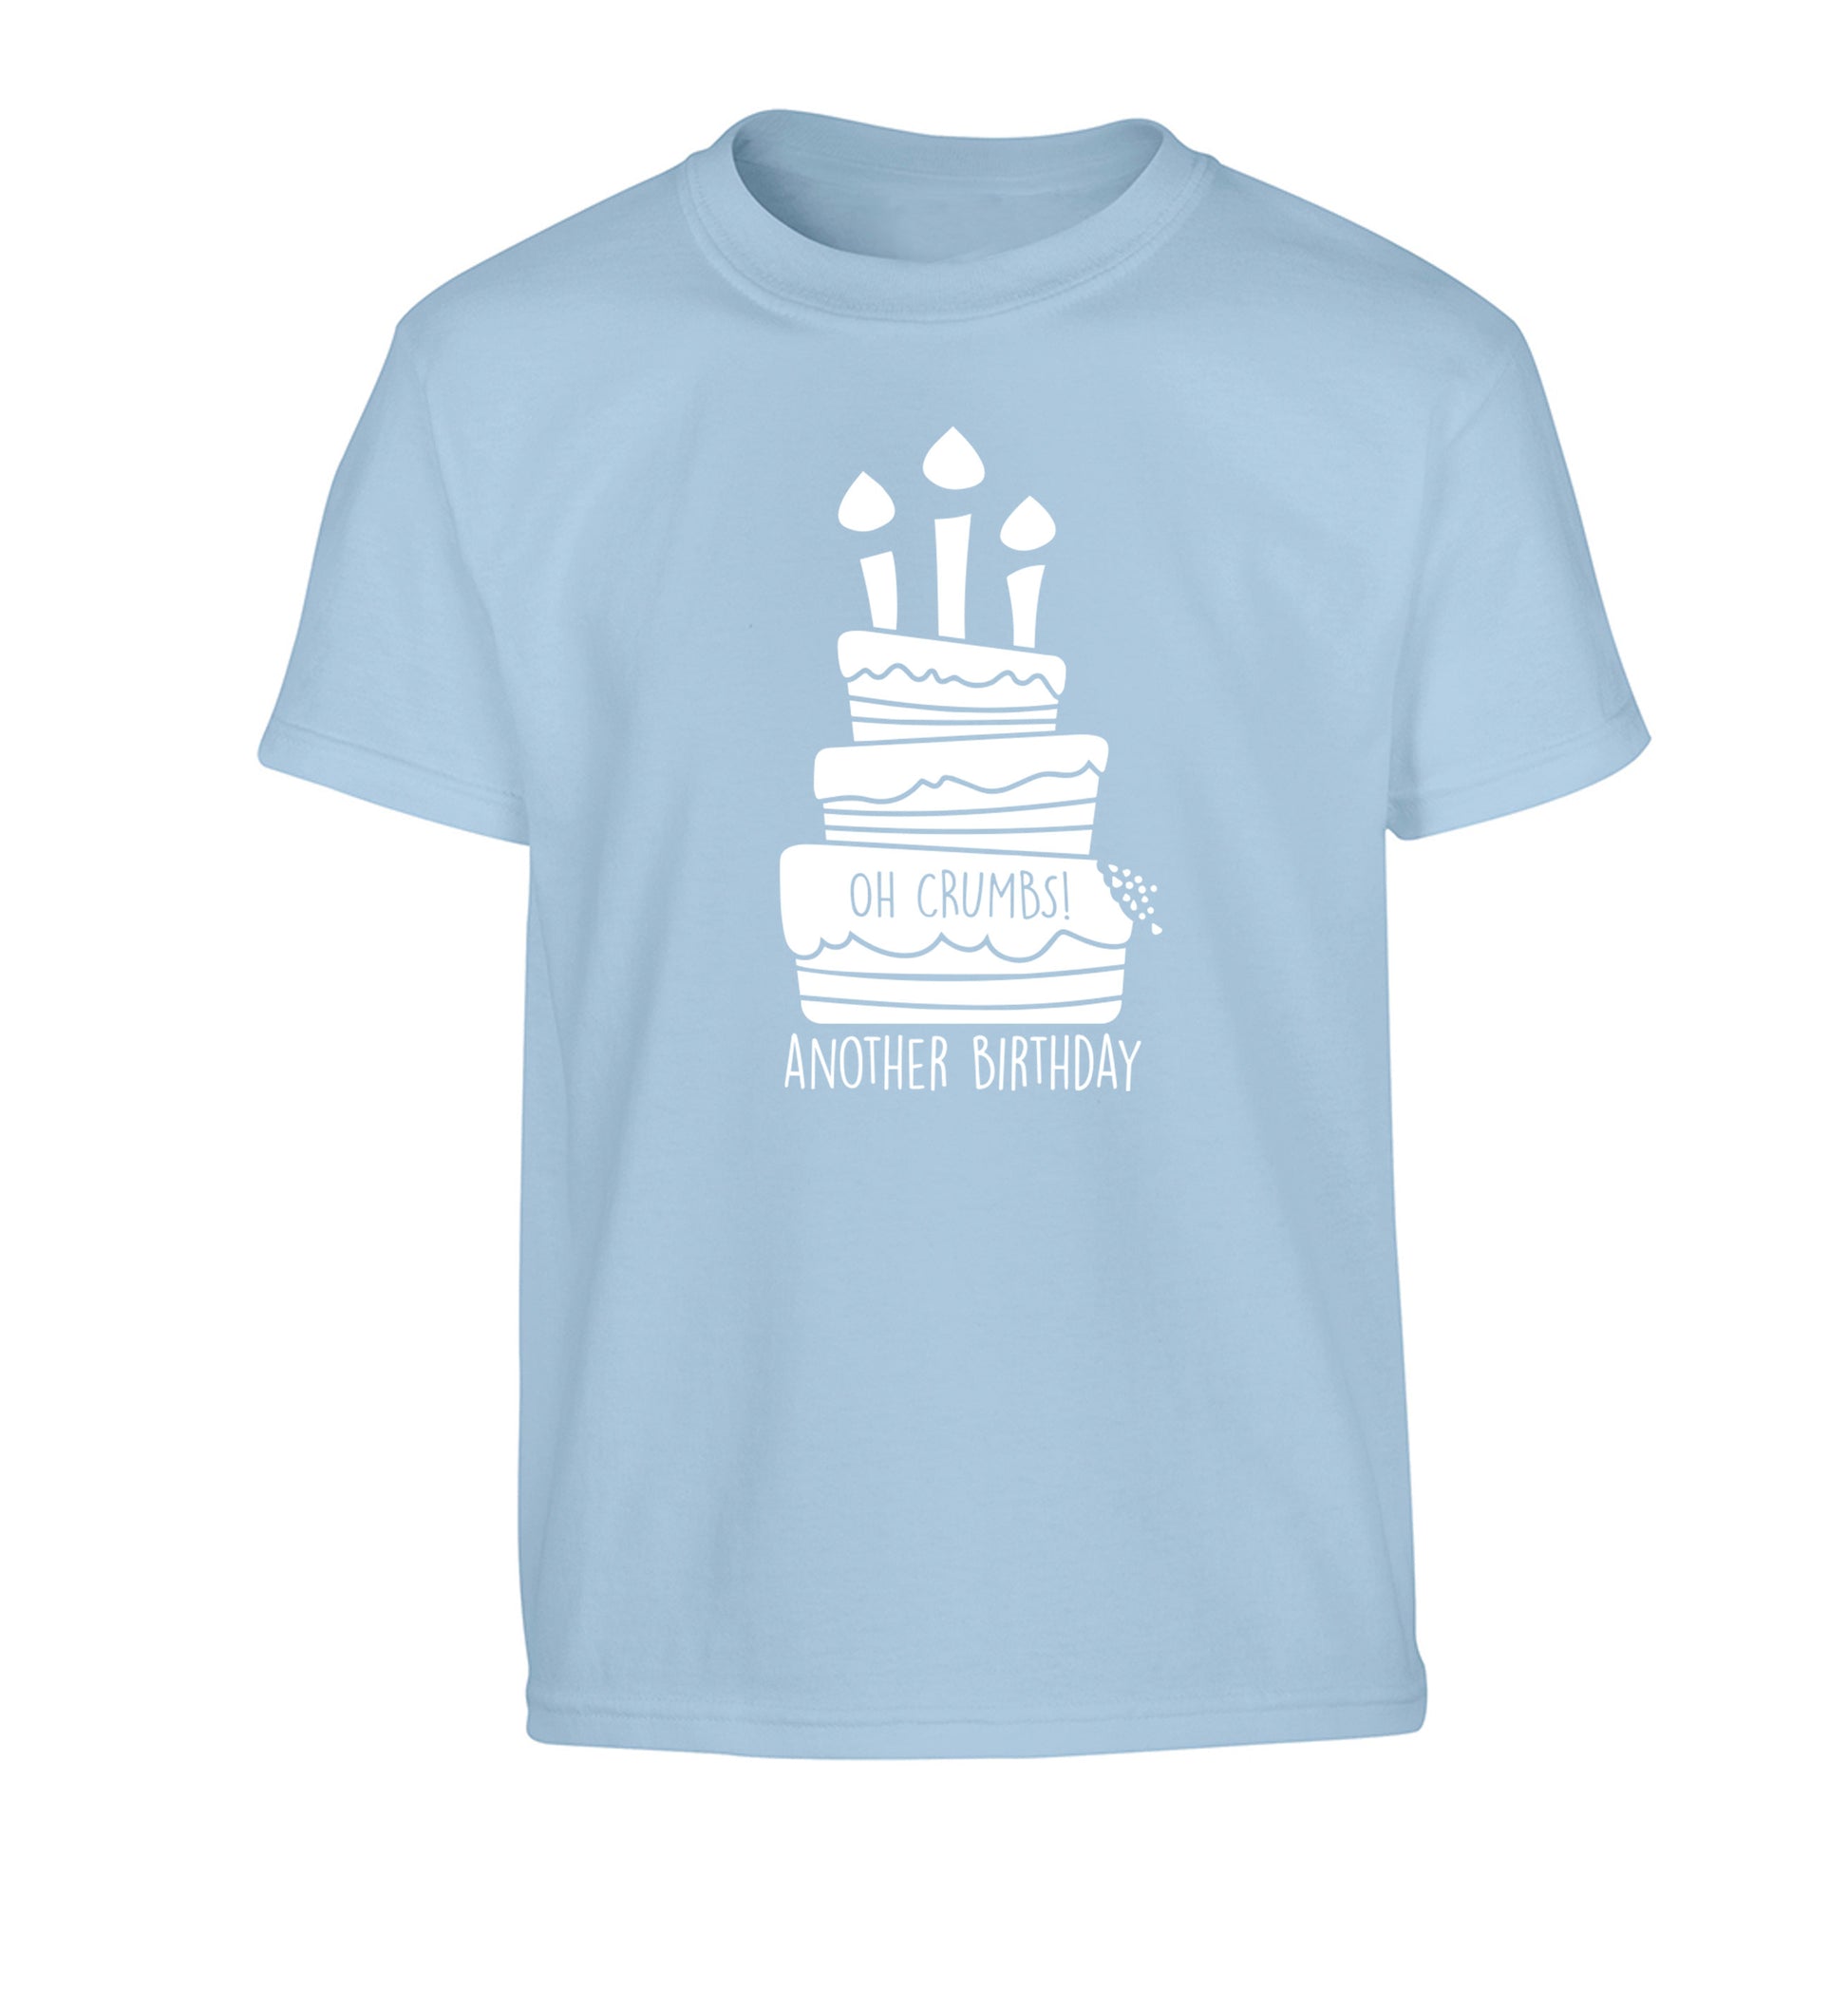 Oh crumbs another birthday! Children's light blue Tshirt 12-14 Years